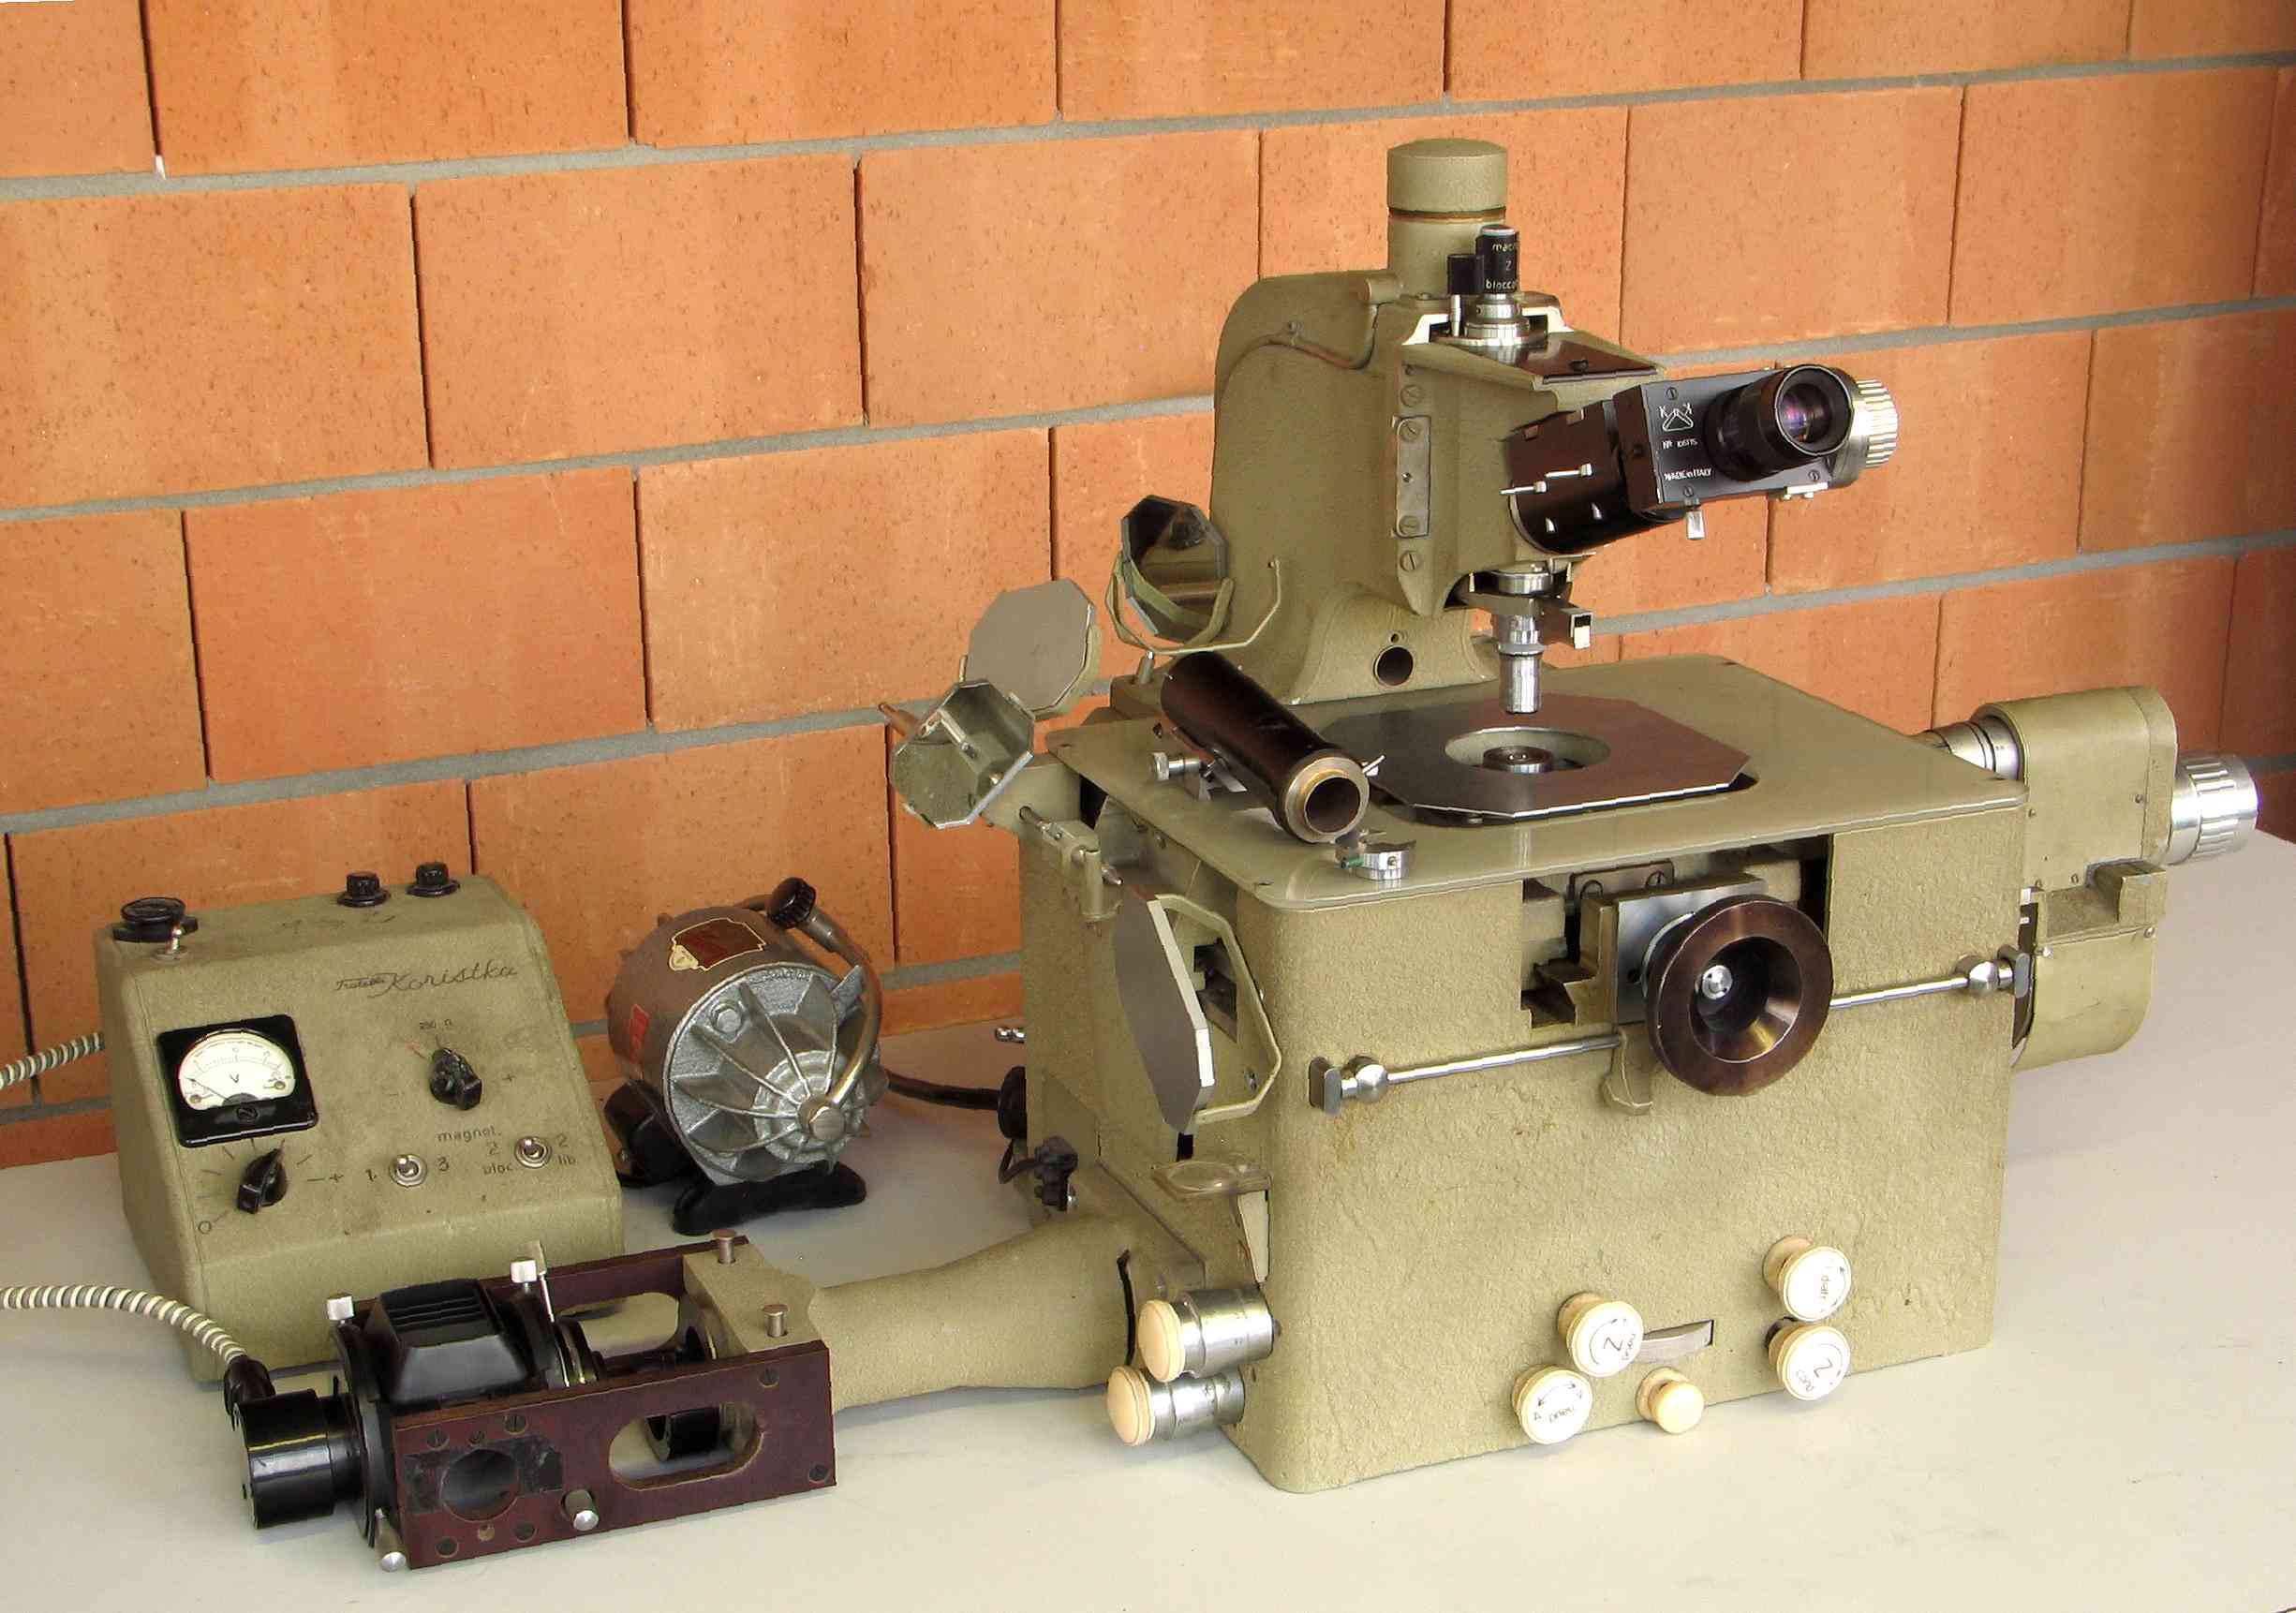 Microscope de mesure
(Koristka MS2)